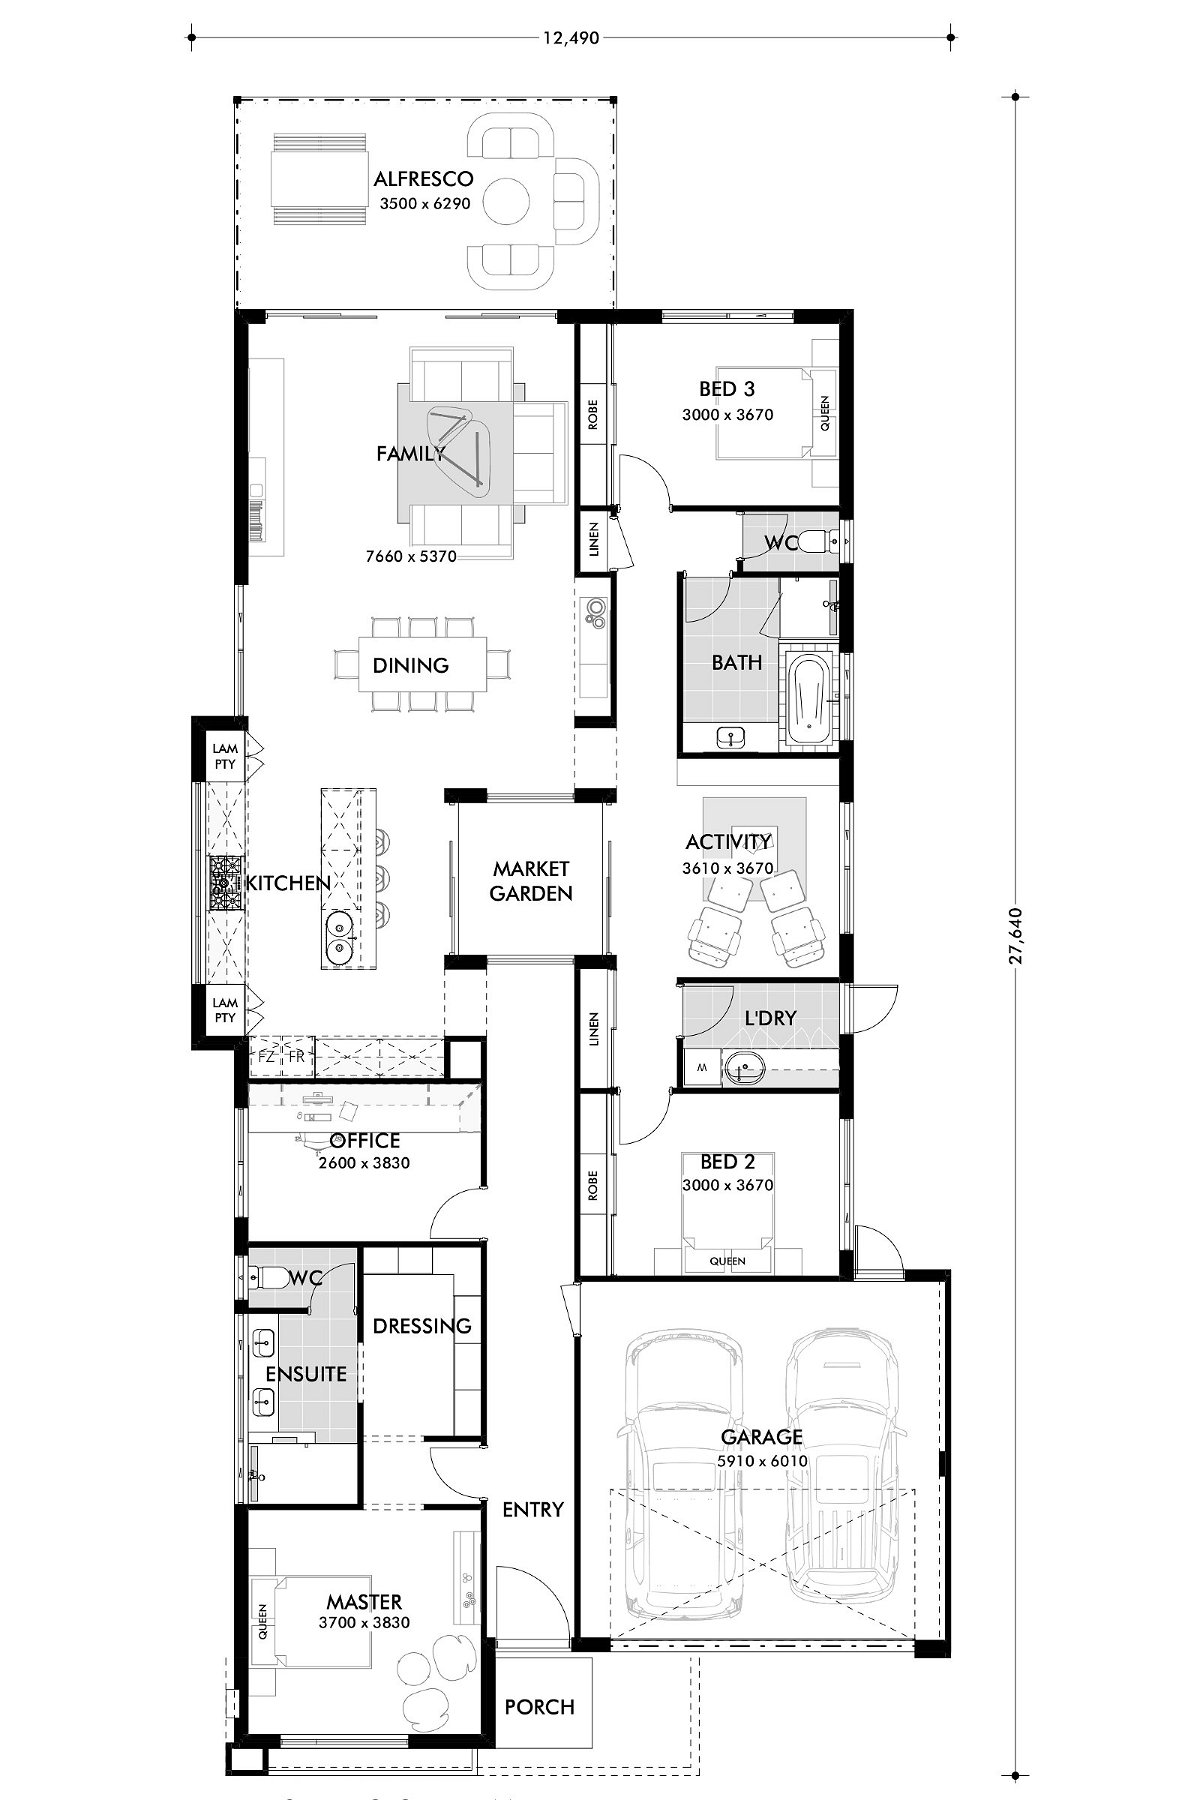 Residential Attitudes - Daydream Nation - Floorplan - Daydream Nation Floorplan Website